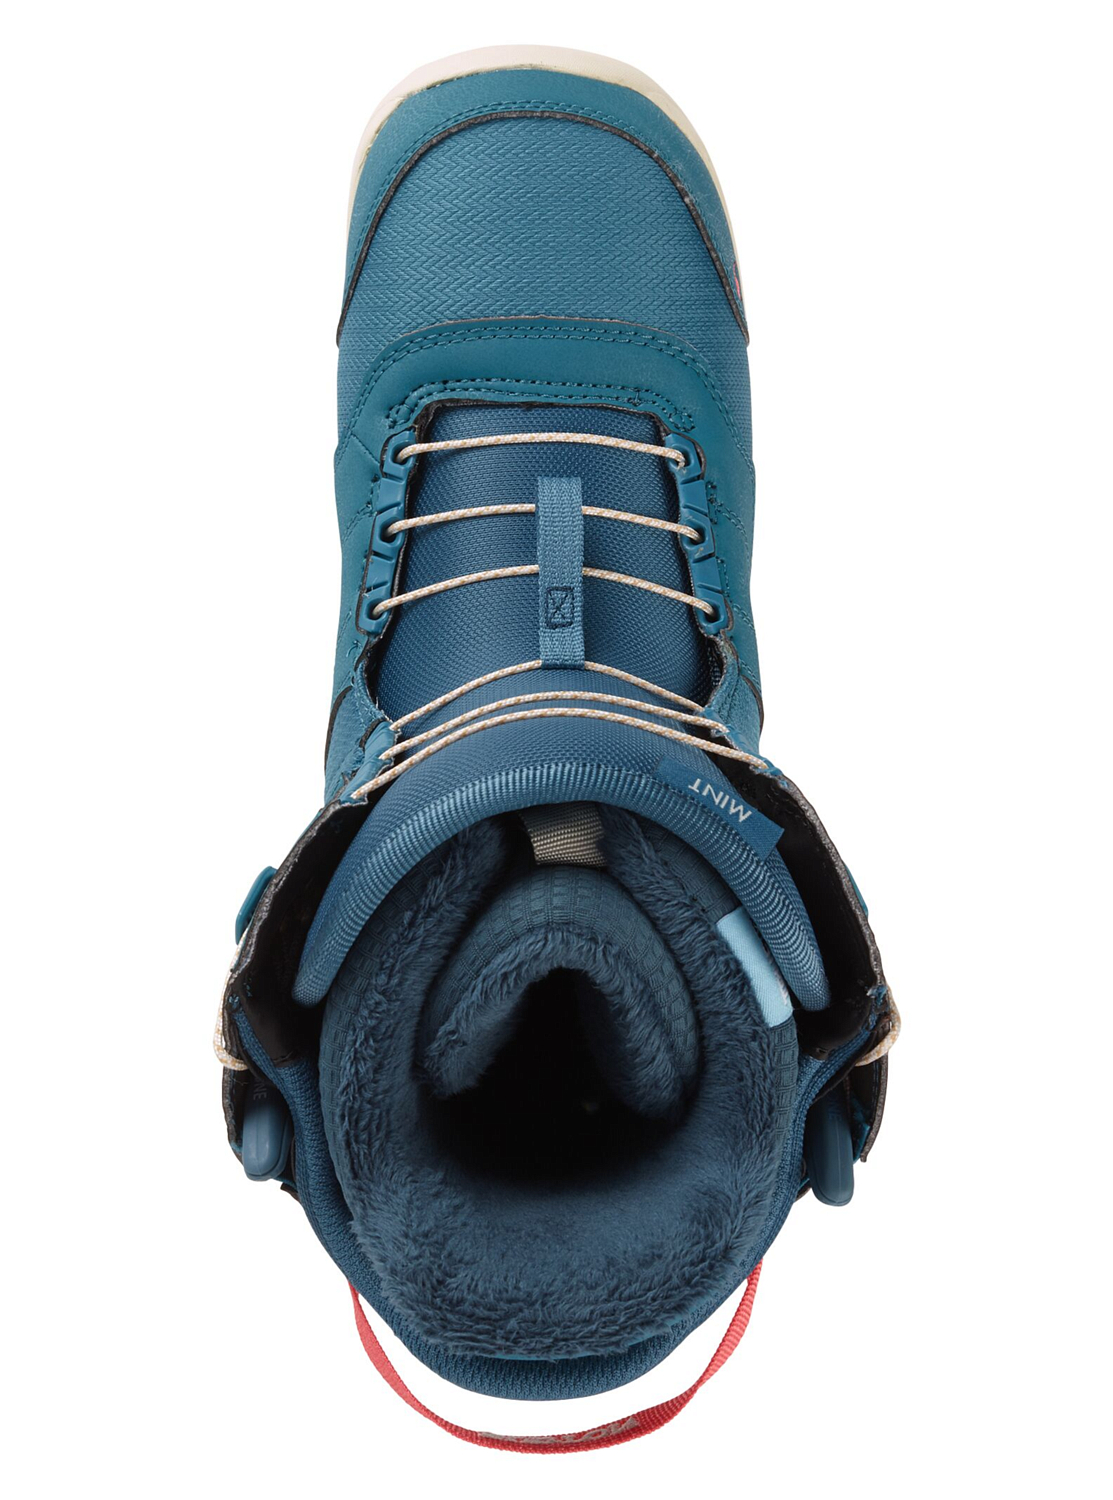 Ботинки для сноуборда BURTON 2019-20 Mint Storm Blue